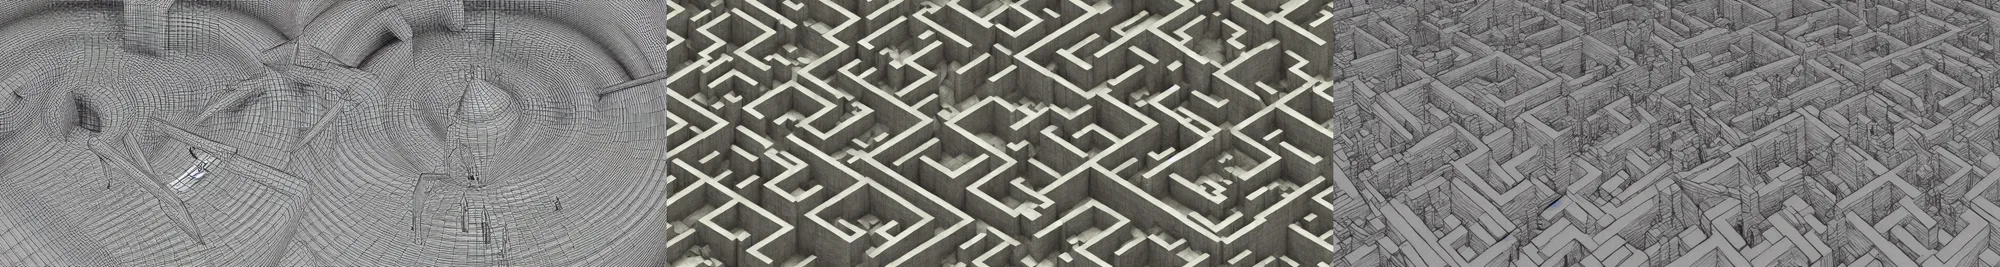 Prompt: a labyrinth by Escher and Francois Schuiten , 3d render